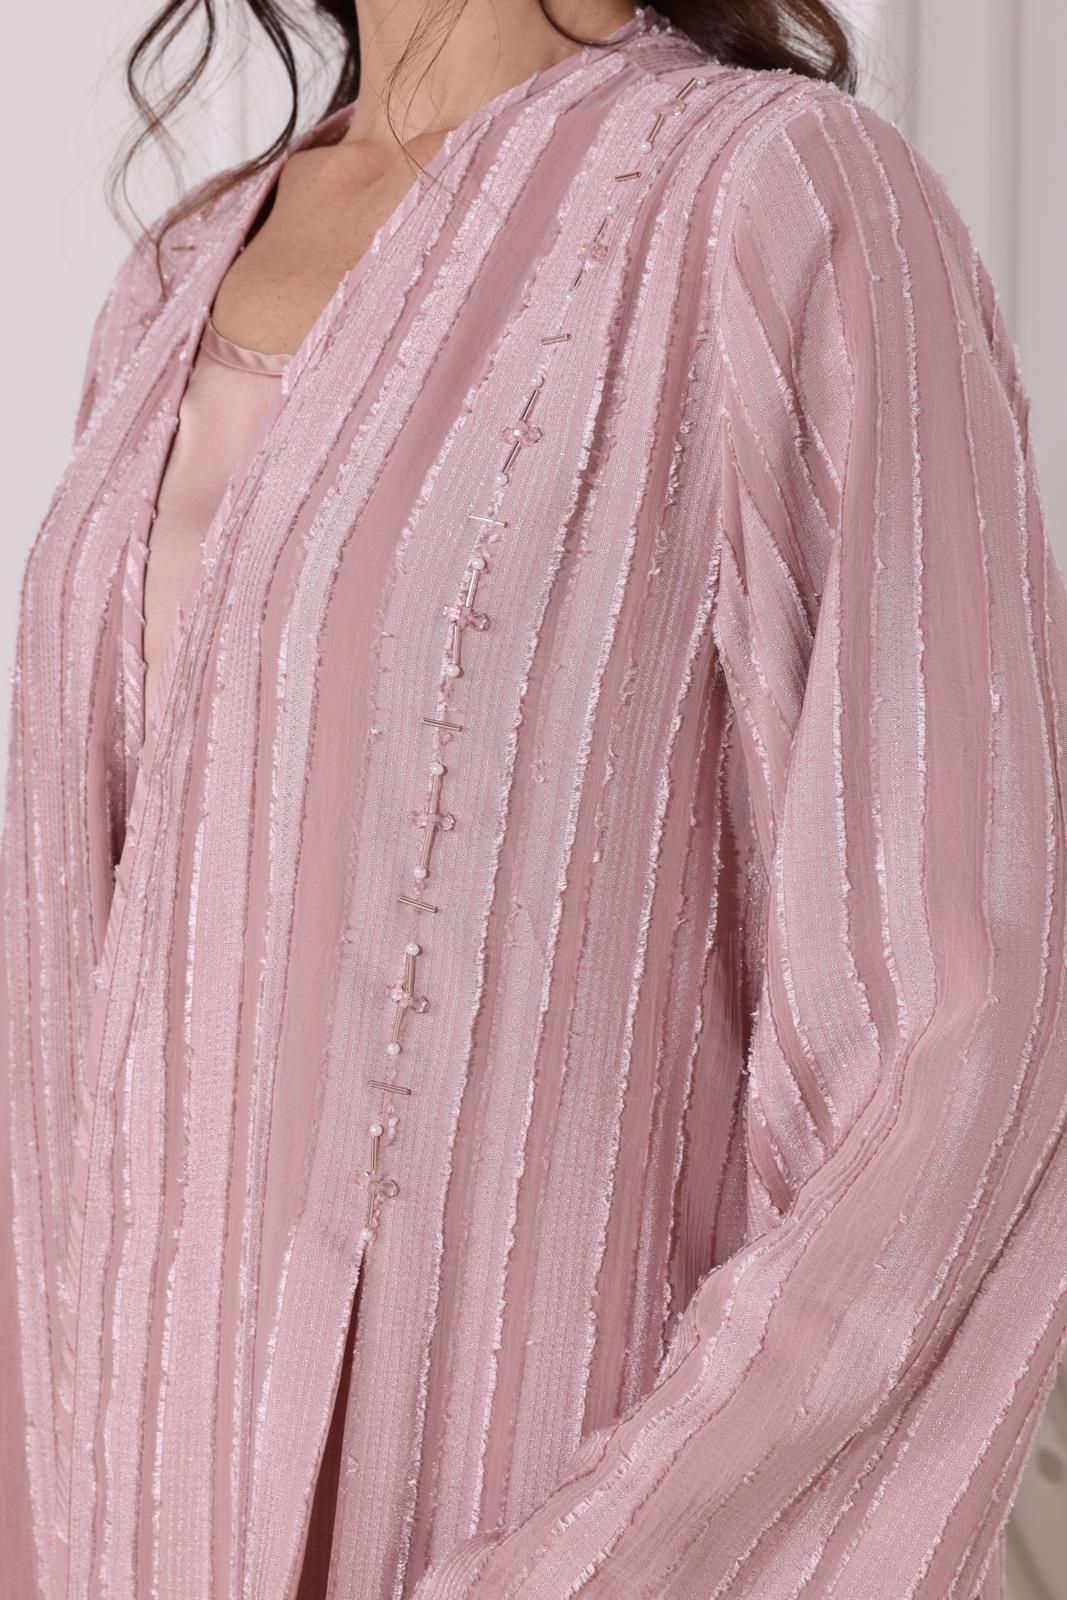 Light pink Georgette abaya